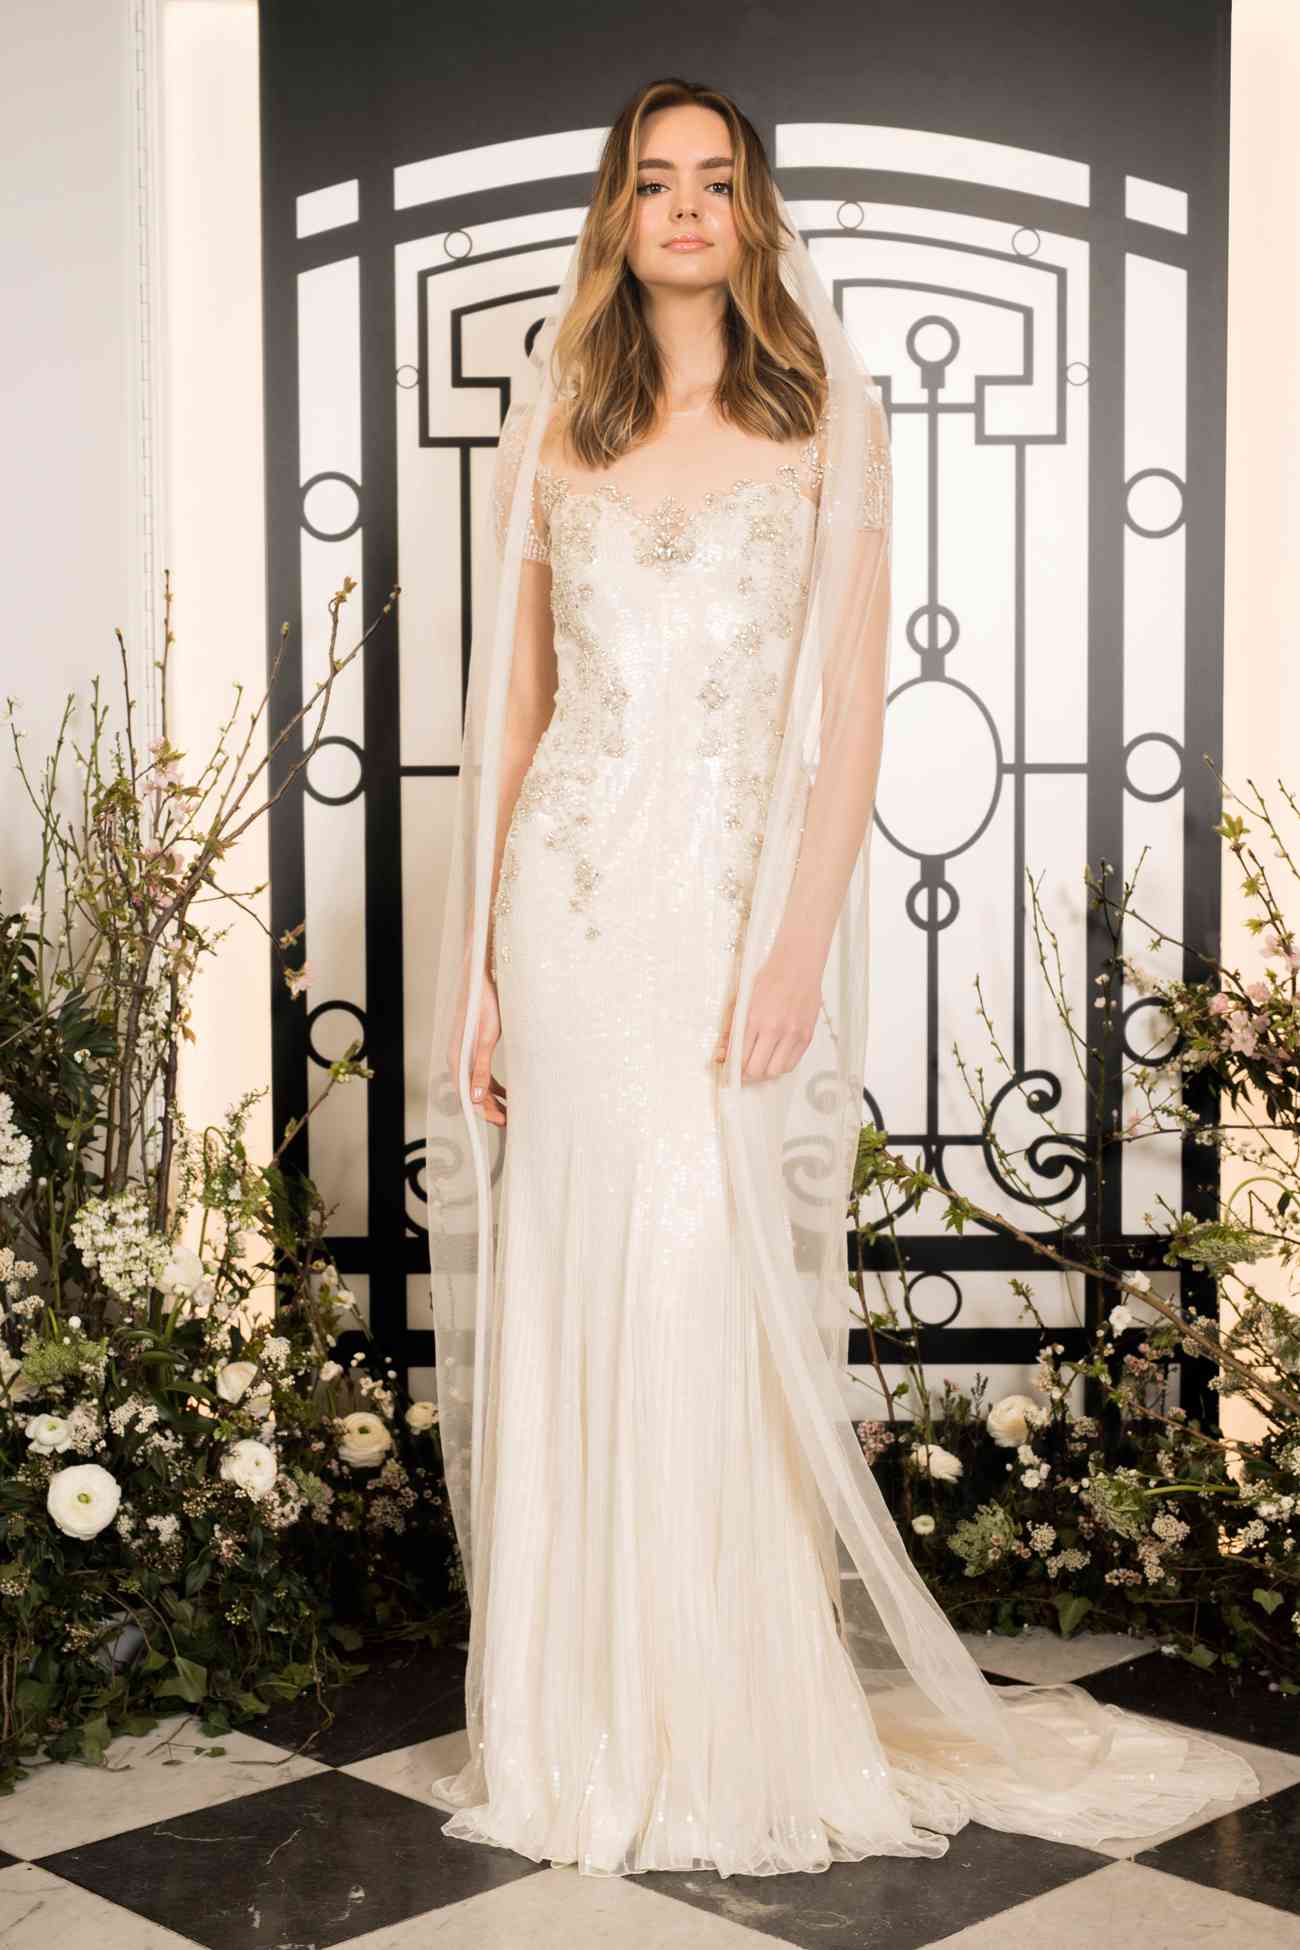 Rizado Revocación Adiós Jenny Packham Bridal Gowns Outlet, 60% OFF | mooving.com.uy